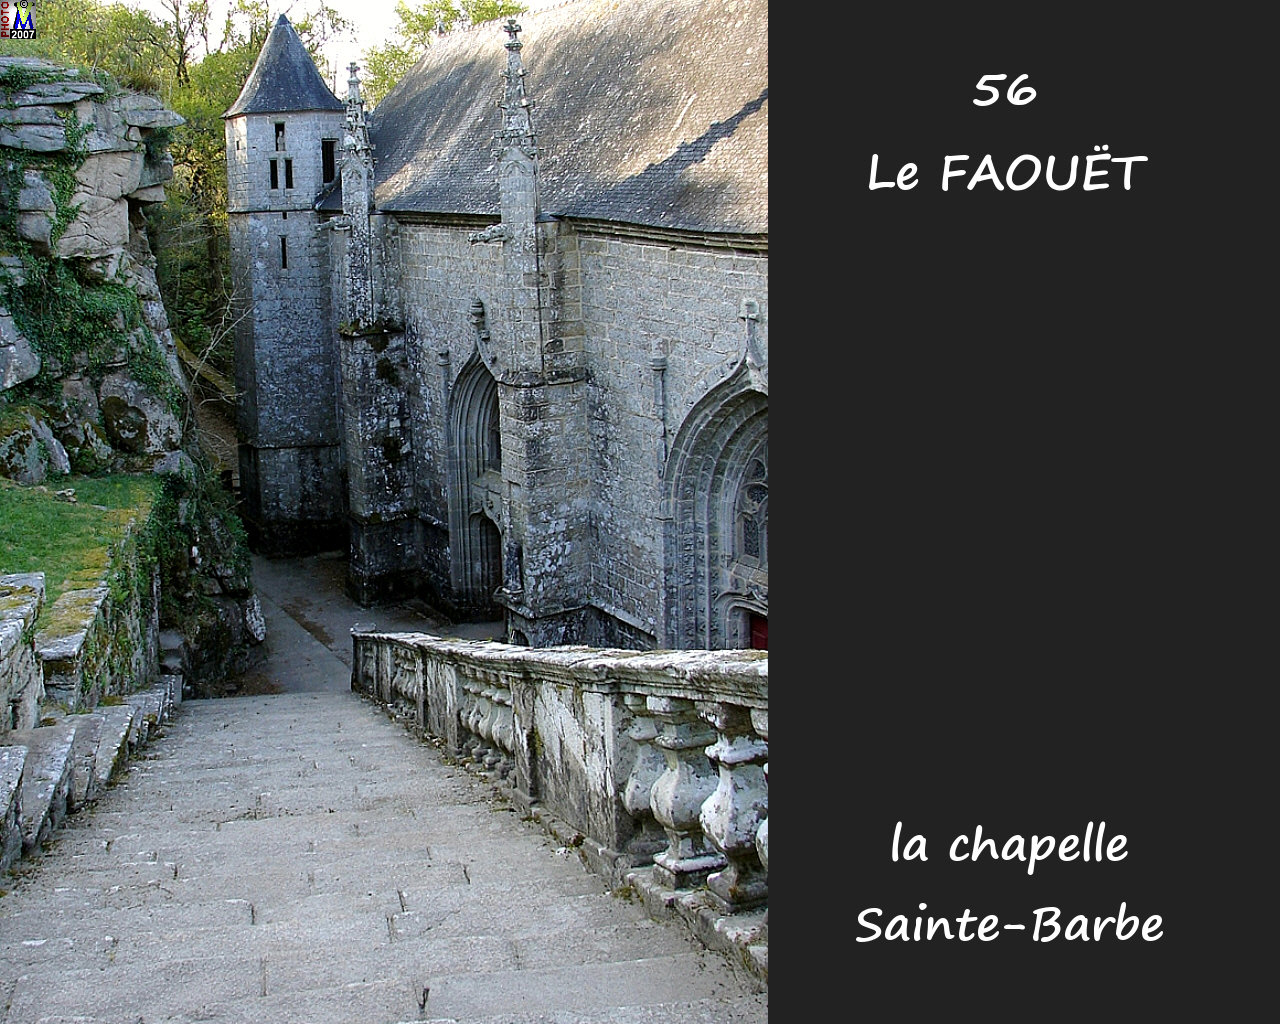 56FAOUET_chapelle-barbe_102.jpg